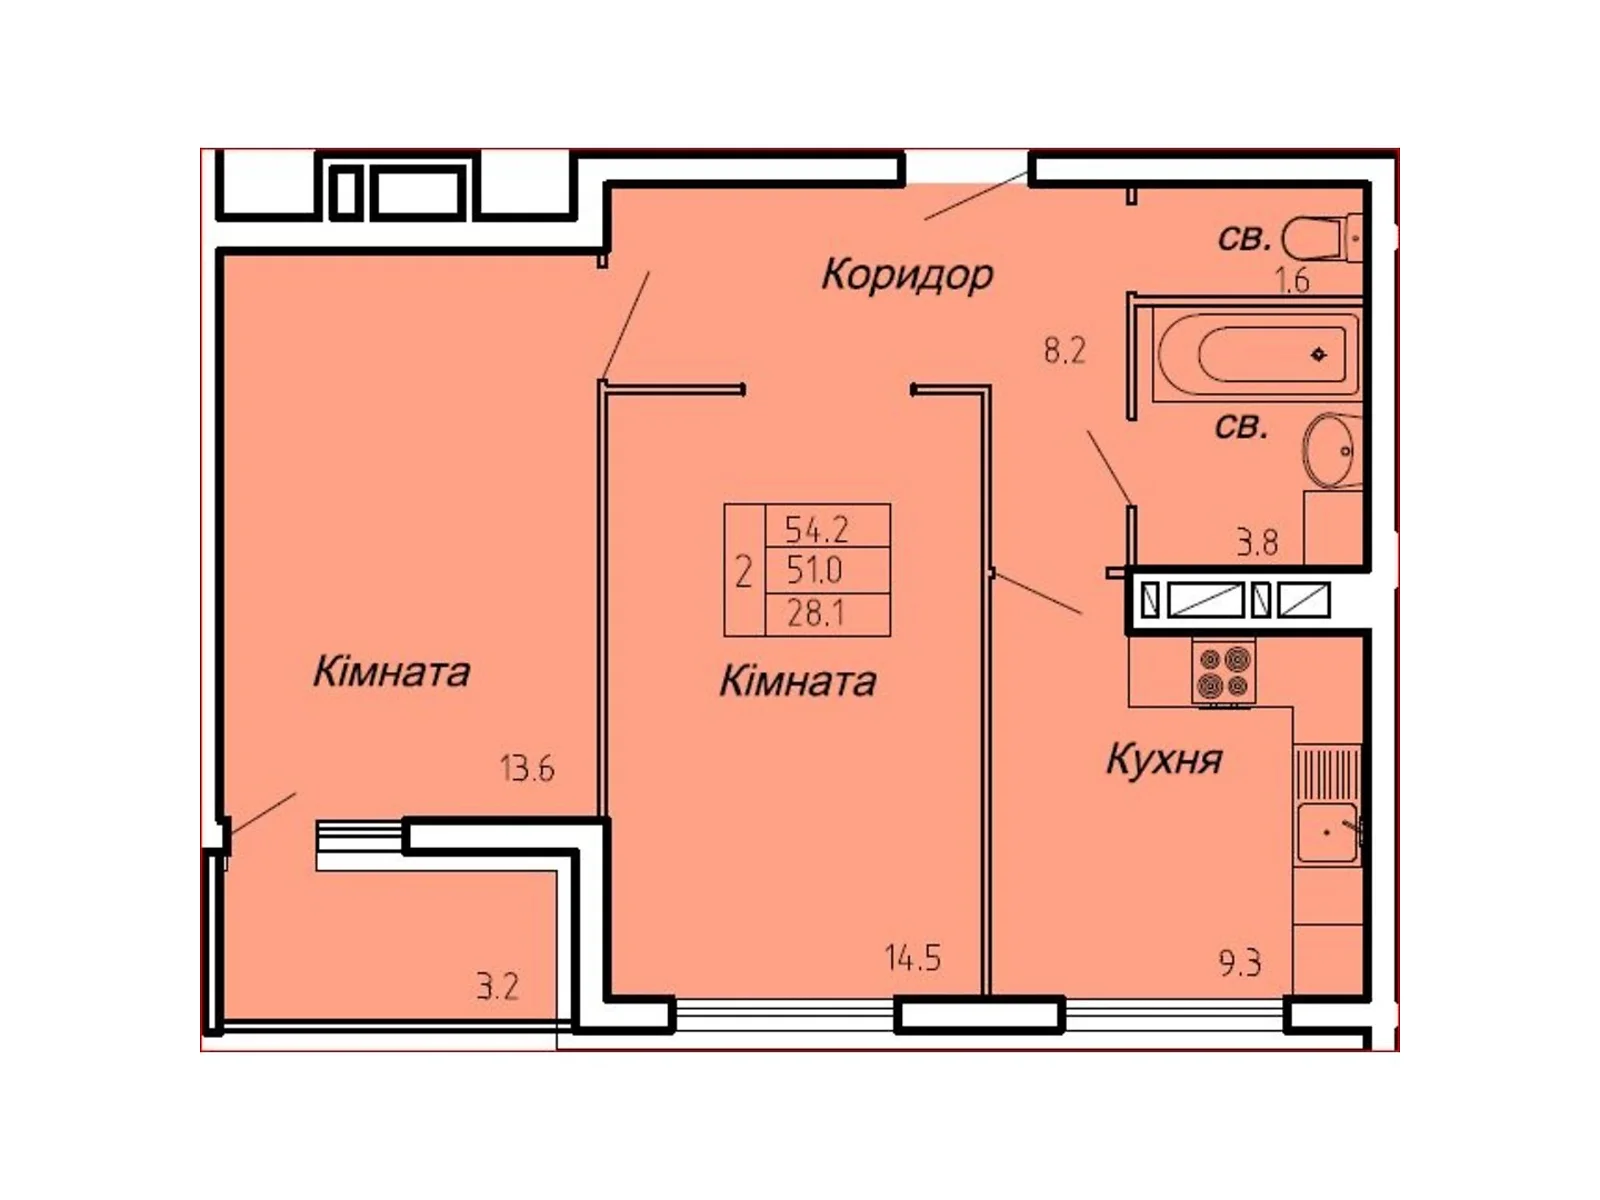 2-кімнатна квартира 54.2 кв. м у Тернополі, вул. Полковника Данила Нечая, 25 - фото 1